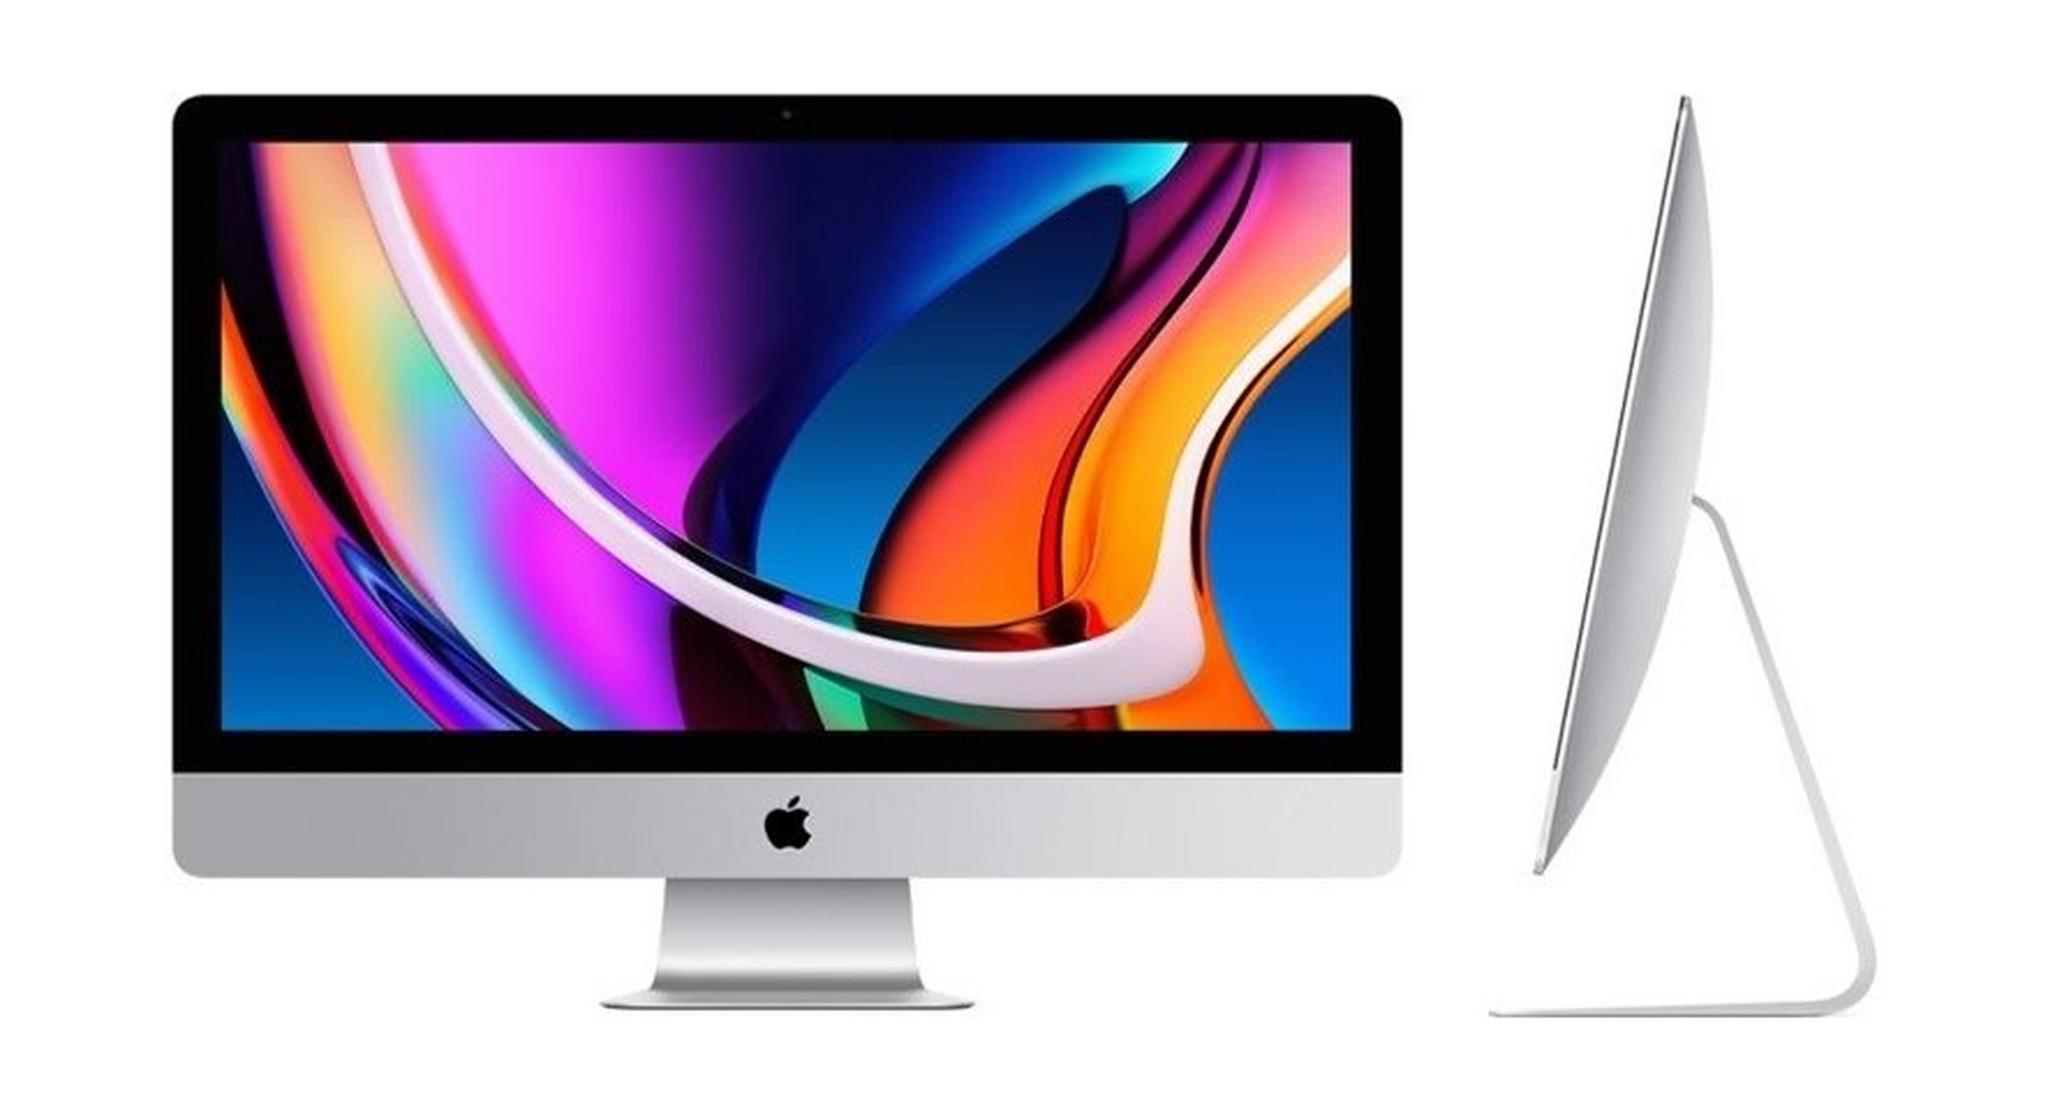 Apple iMac Intel Core 10th Gen i5 8GB RAM 512GB SSD 27" 5K All-In-One Desktop - (MXWU2AB/A)